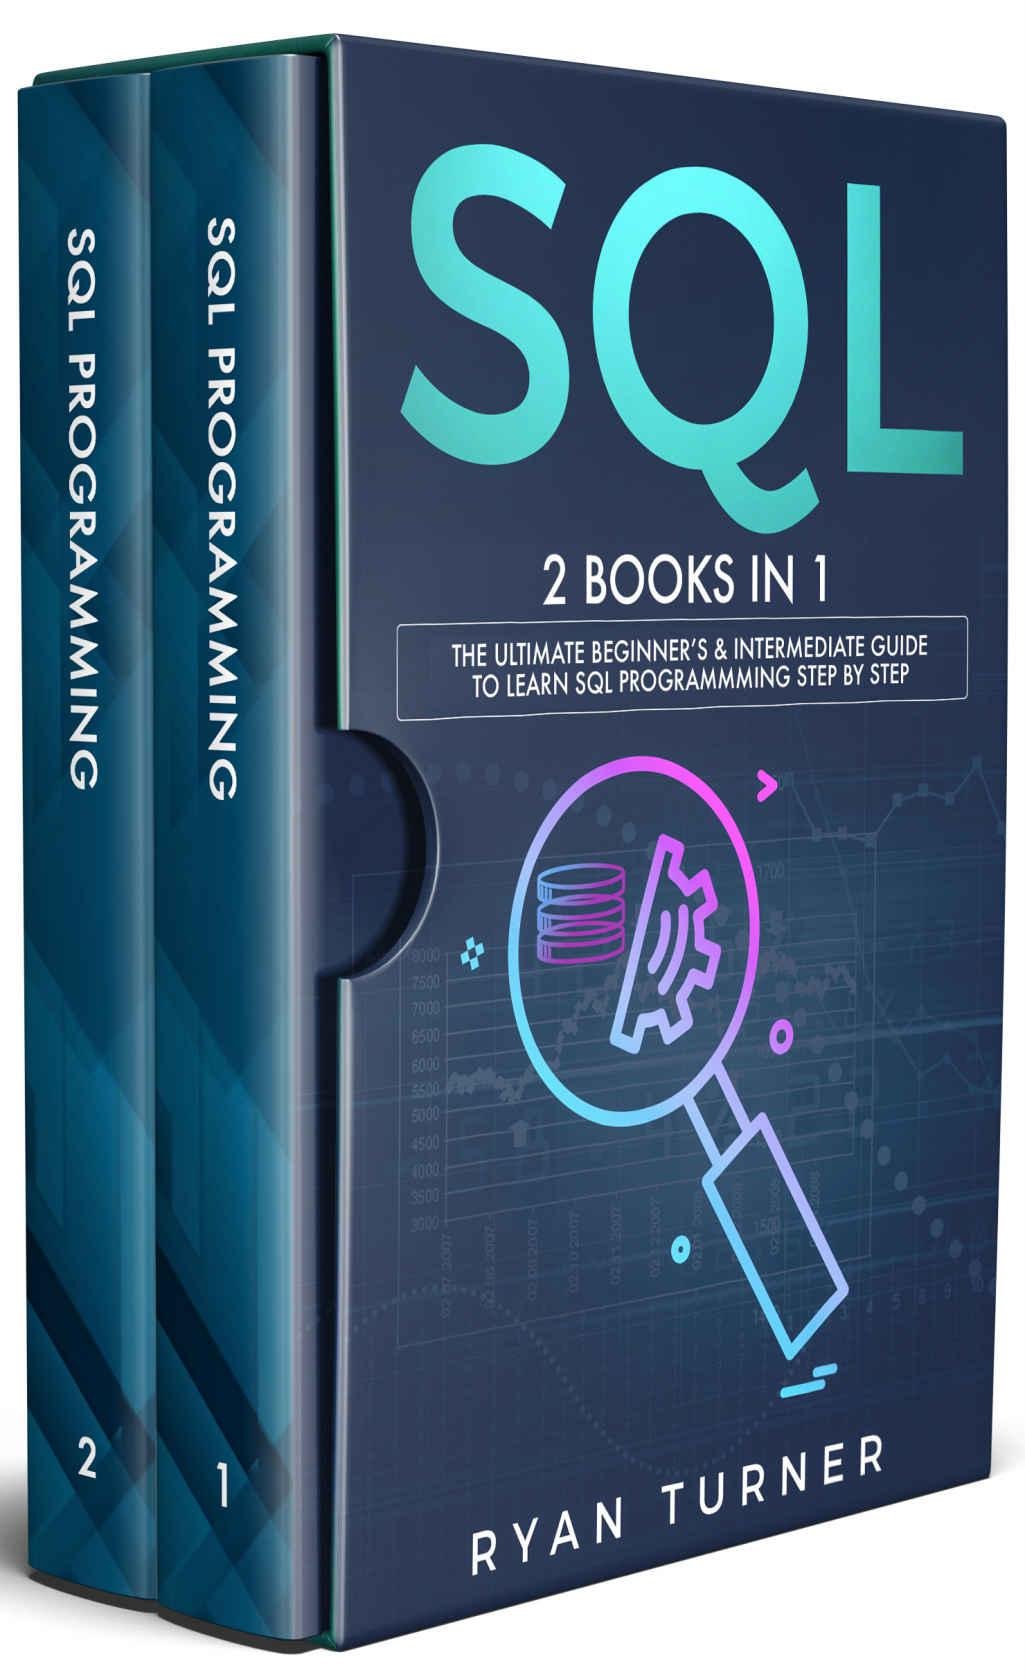 Download SQL: 2 books in 1 - The Ultimate Beginner's & Intermediate